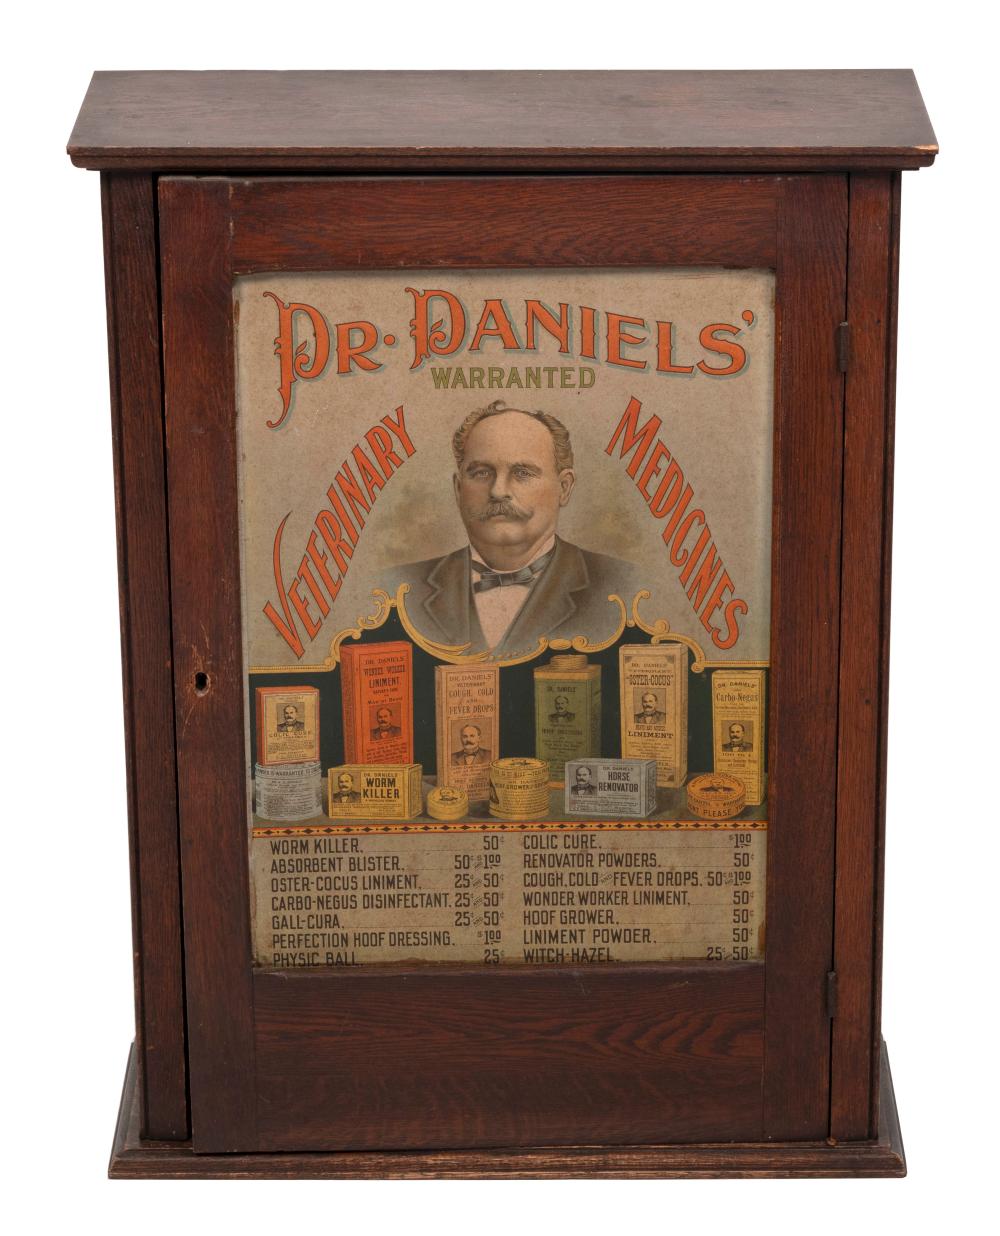 DR. DANIEL’S WARRANTED VETERINARY